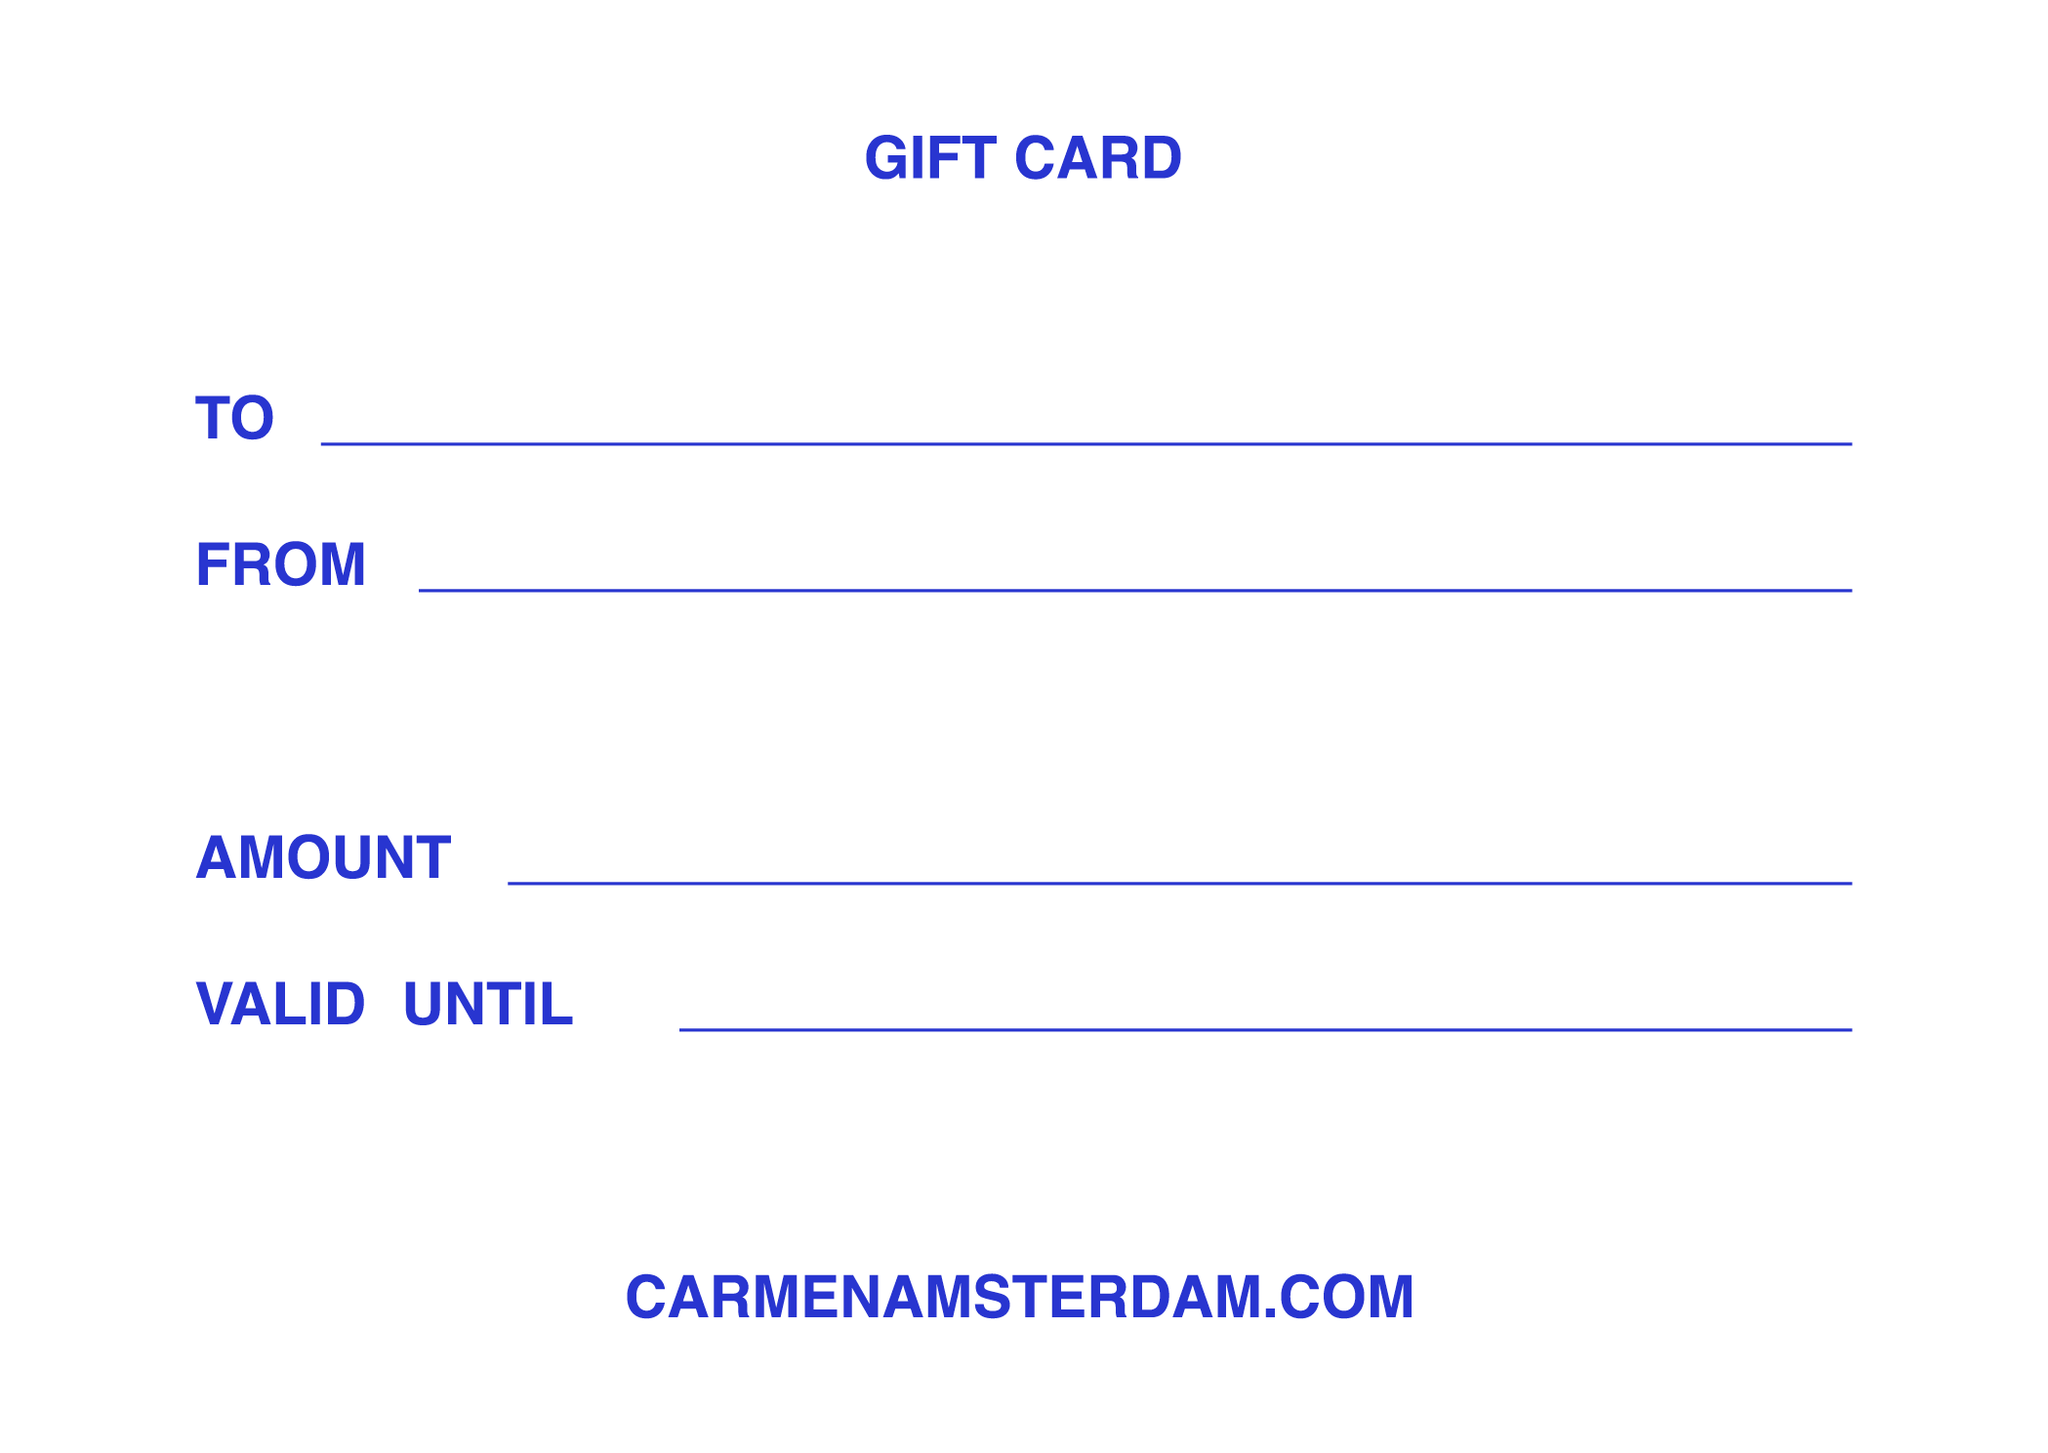 CARMEN Gift Card